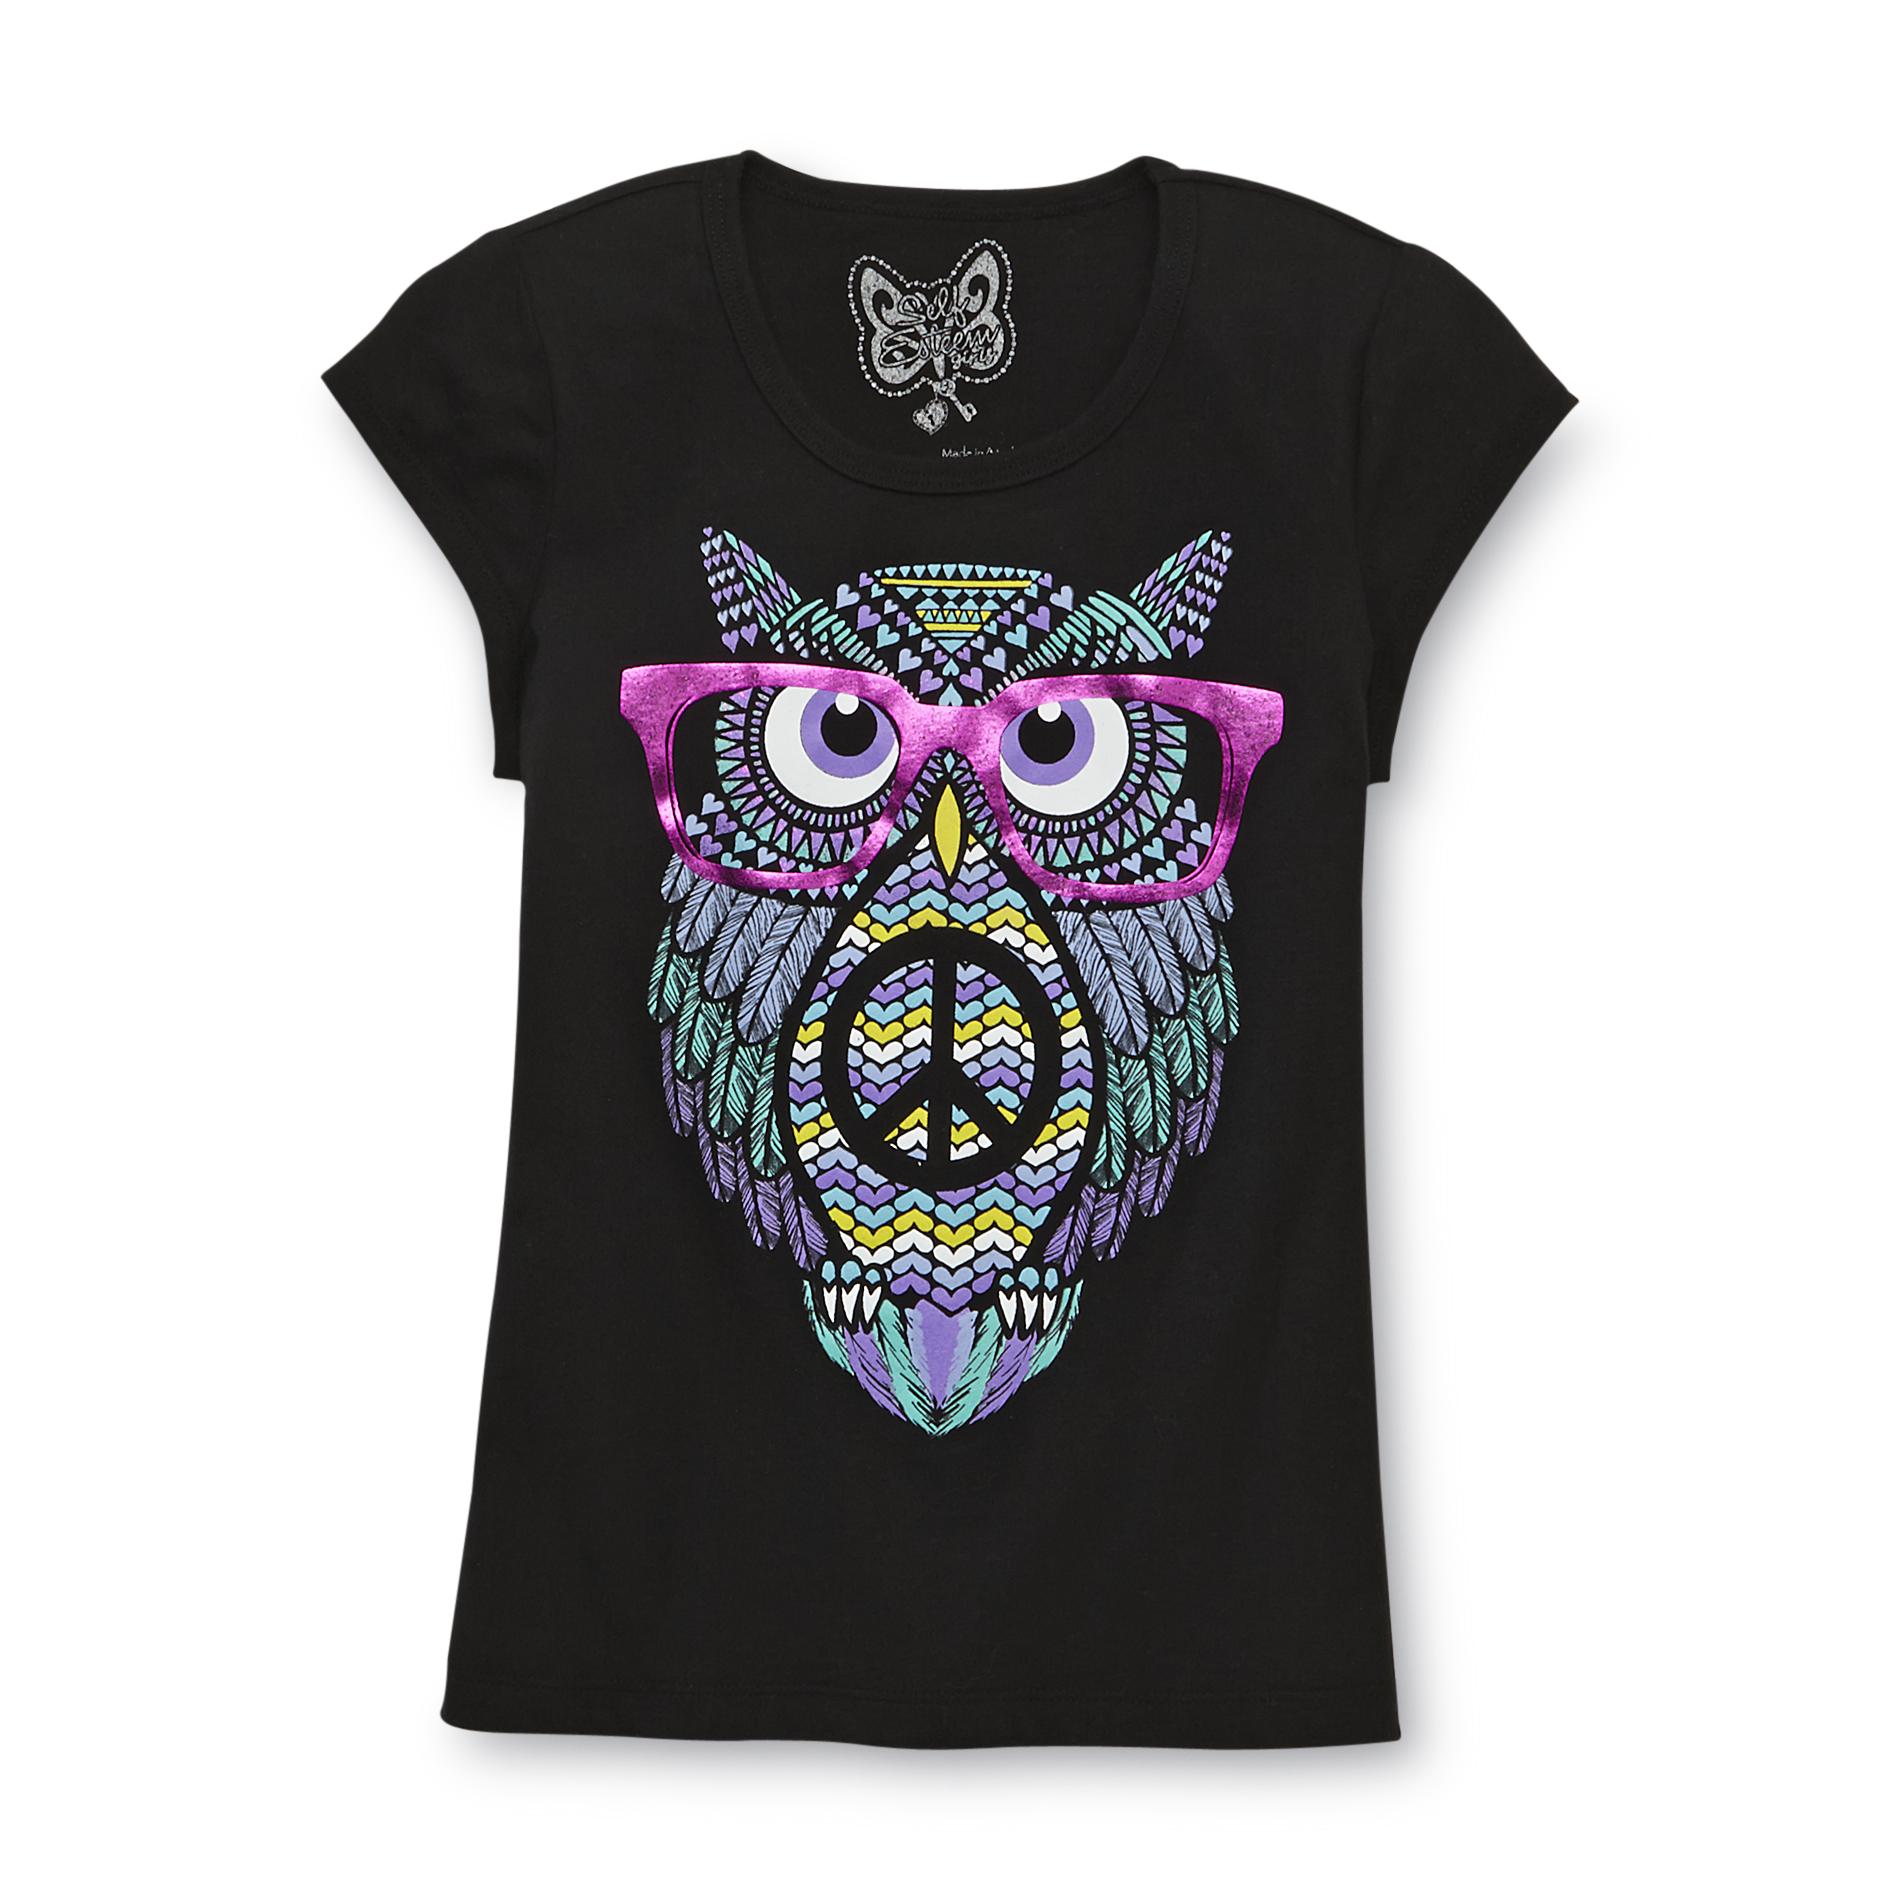 Self Esteem Girl's Graphic T-Shirt - Owl